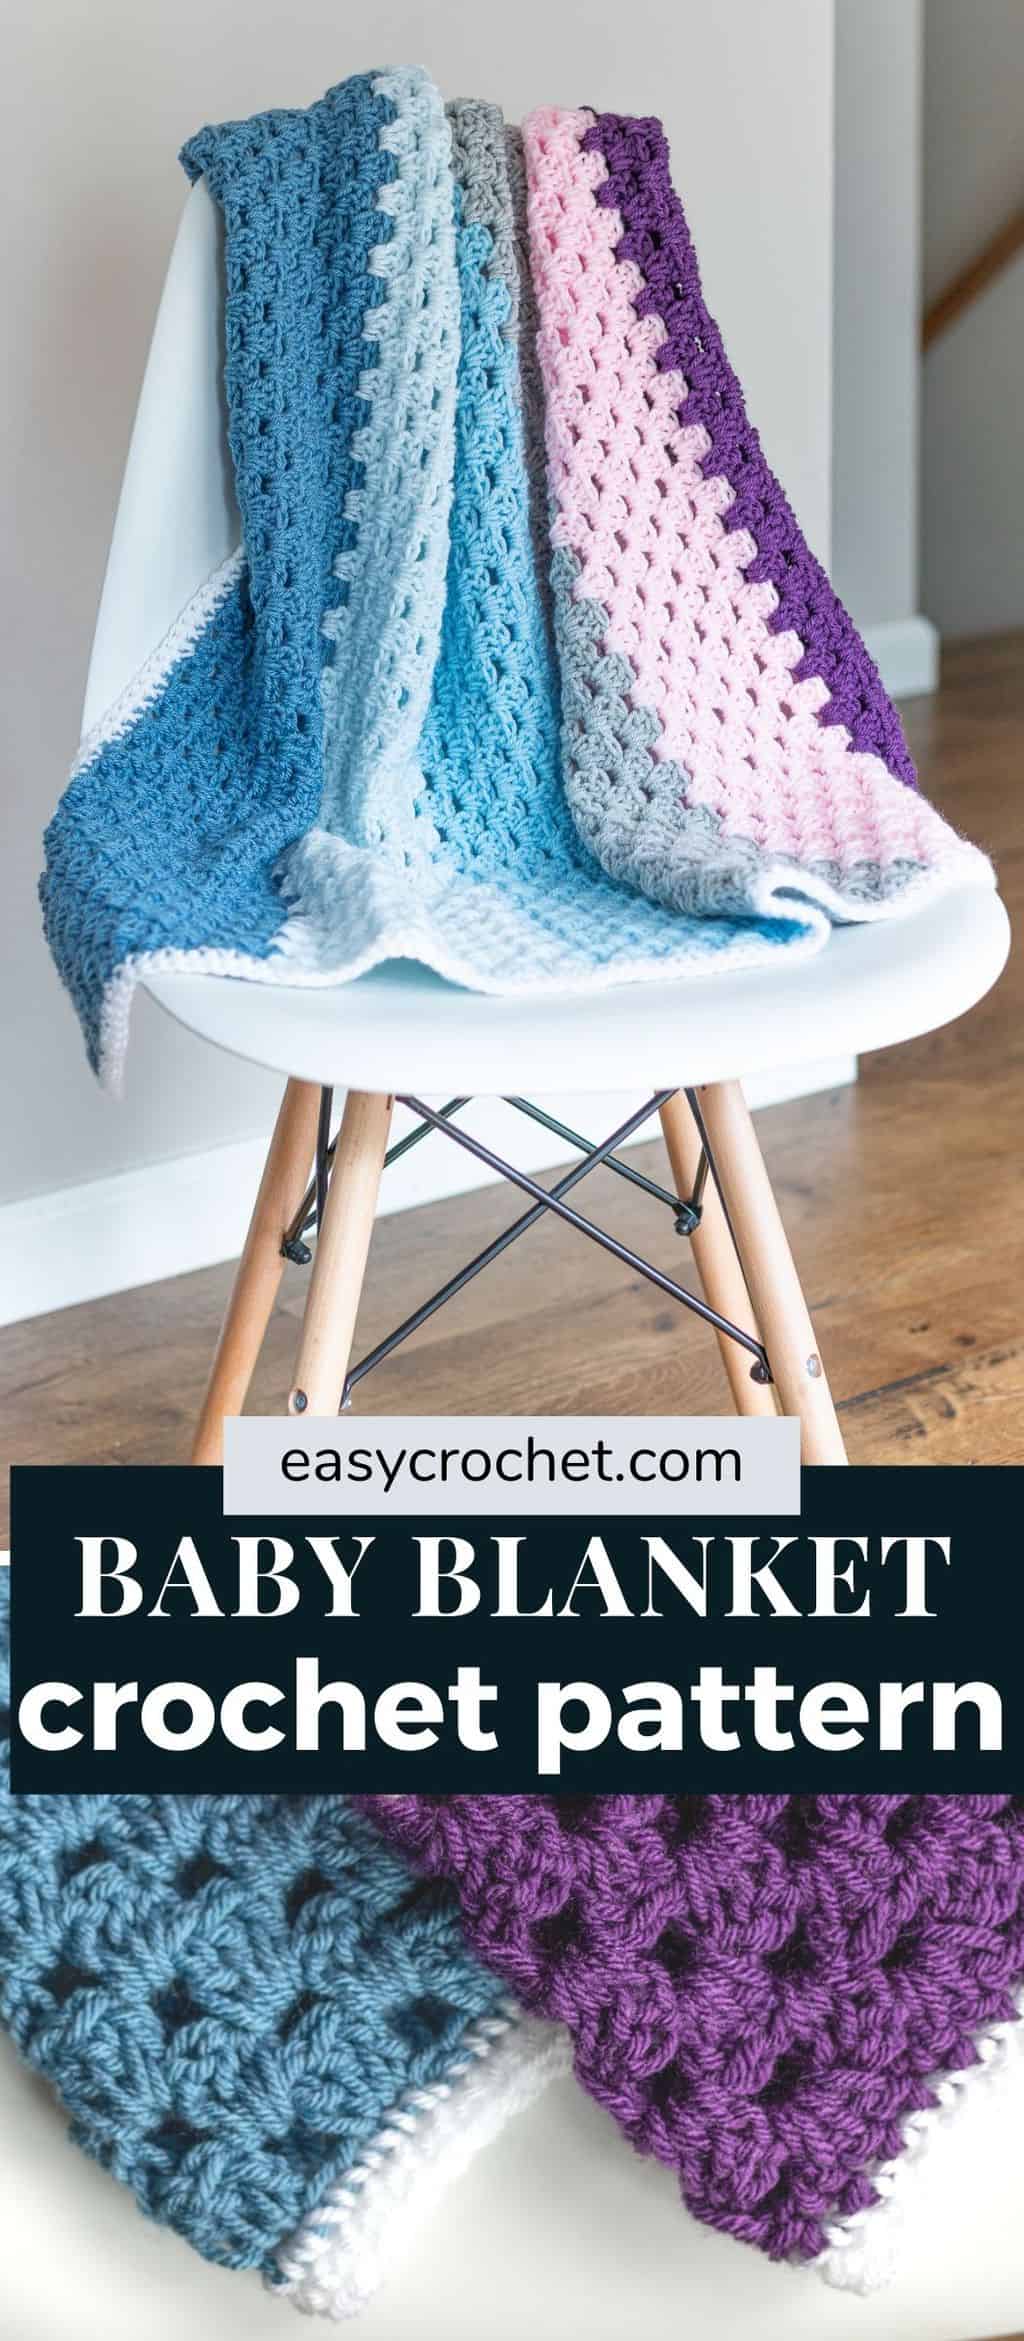 Granny Baby Blanket Crochet Pattern - Use this beginner-friendly granny stitch pattern to crochet an easy crocheted baby blanket pattern via @easycrochetcom